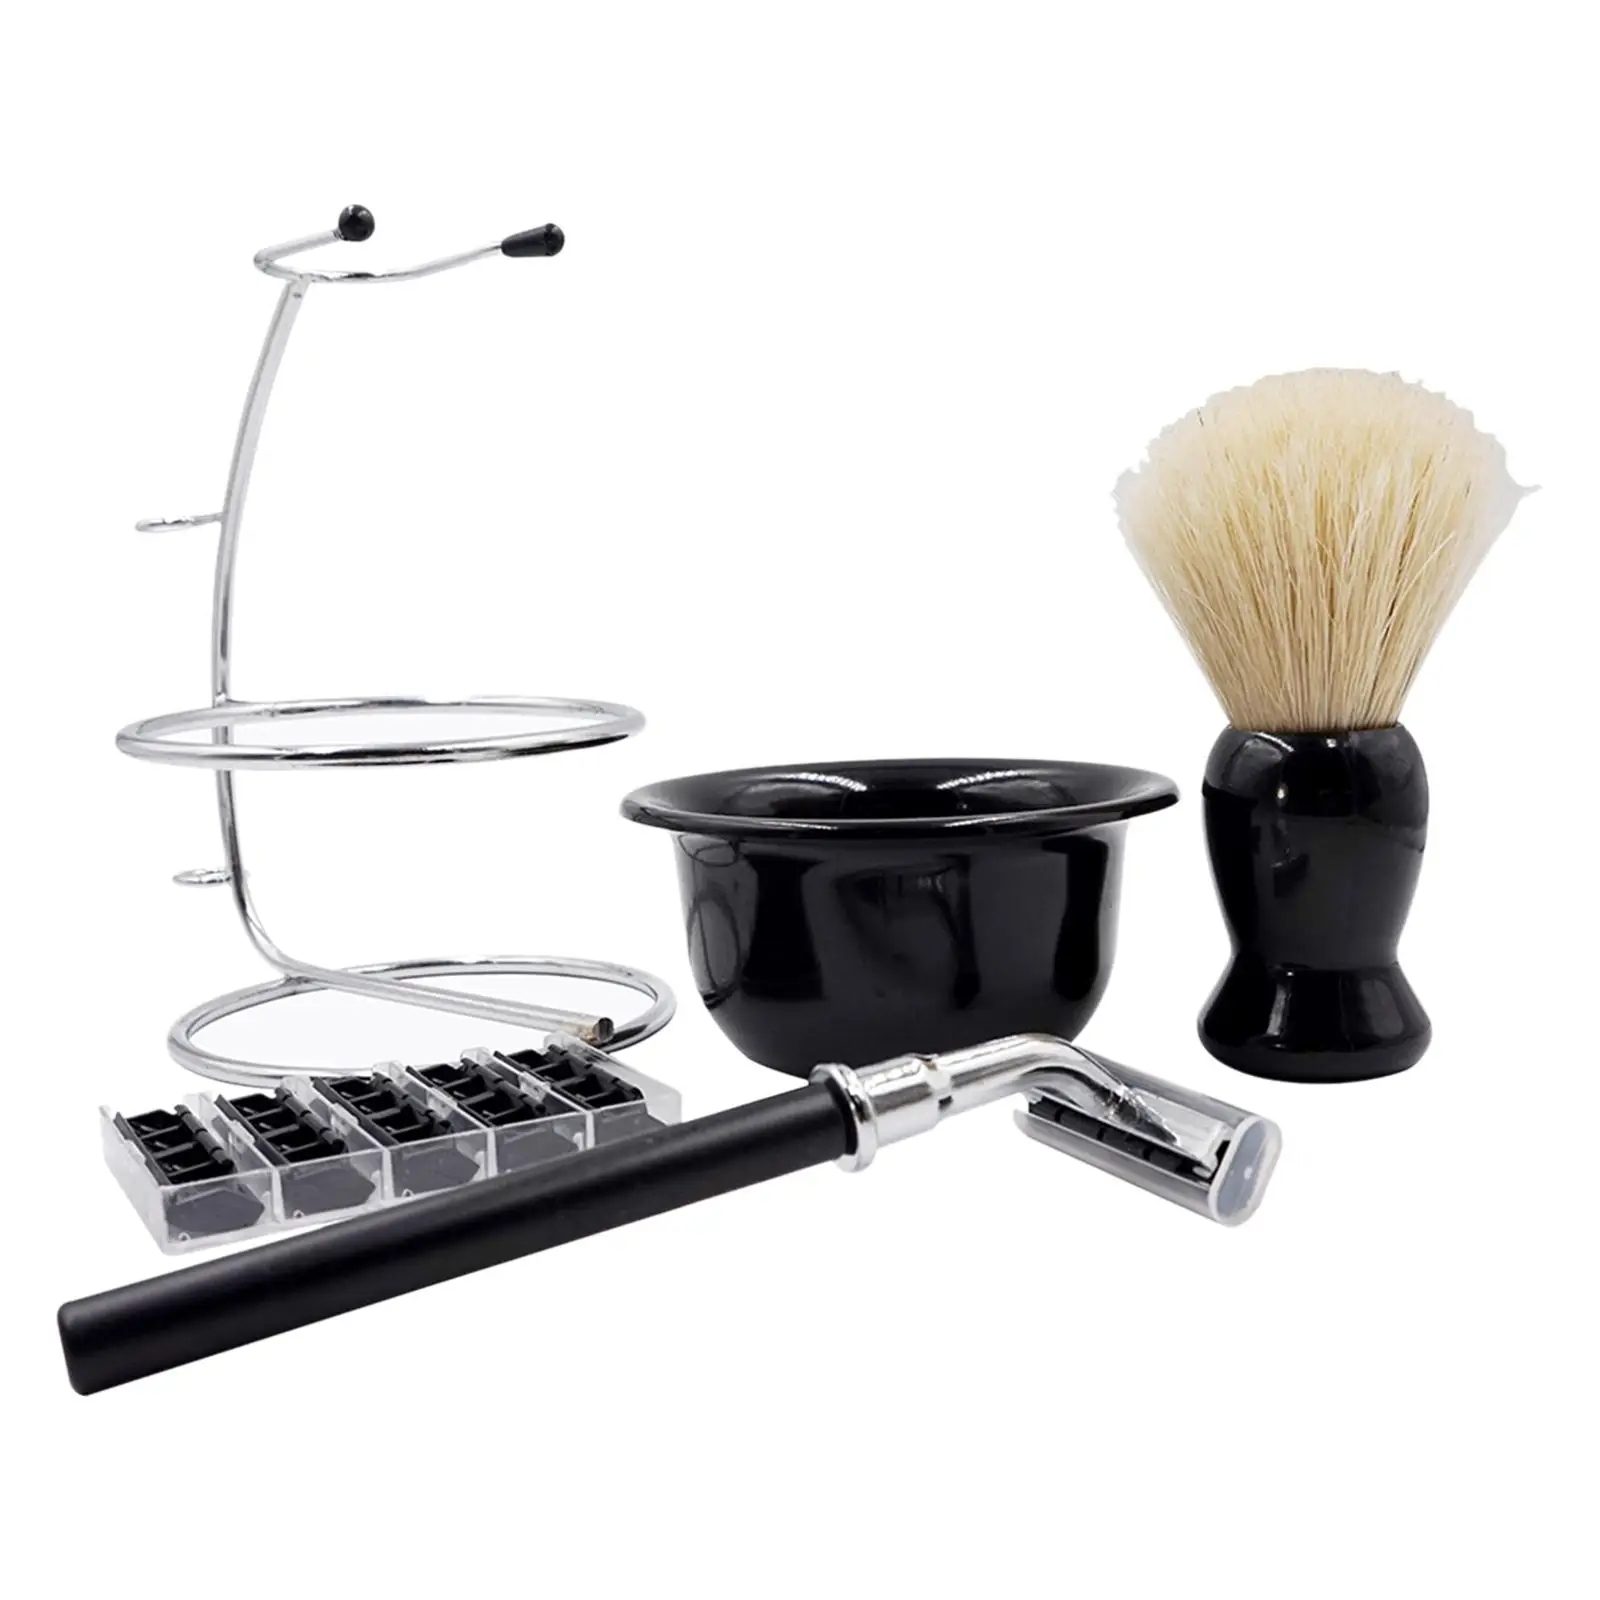 Travel Shaving Kit for Men Manual Stand Brush Bowl Set Accessories Portable